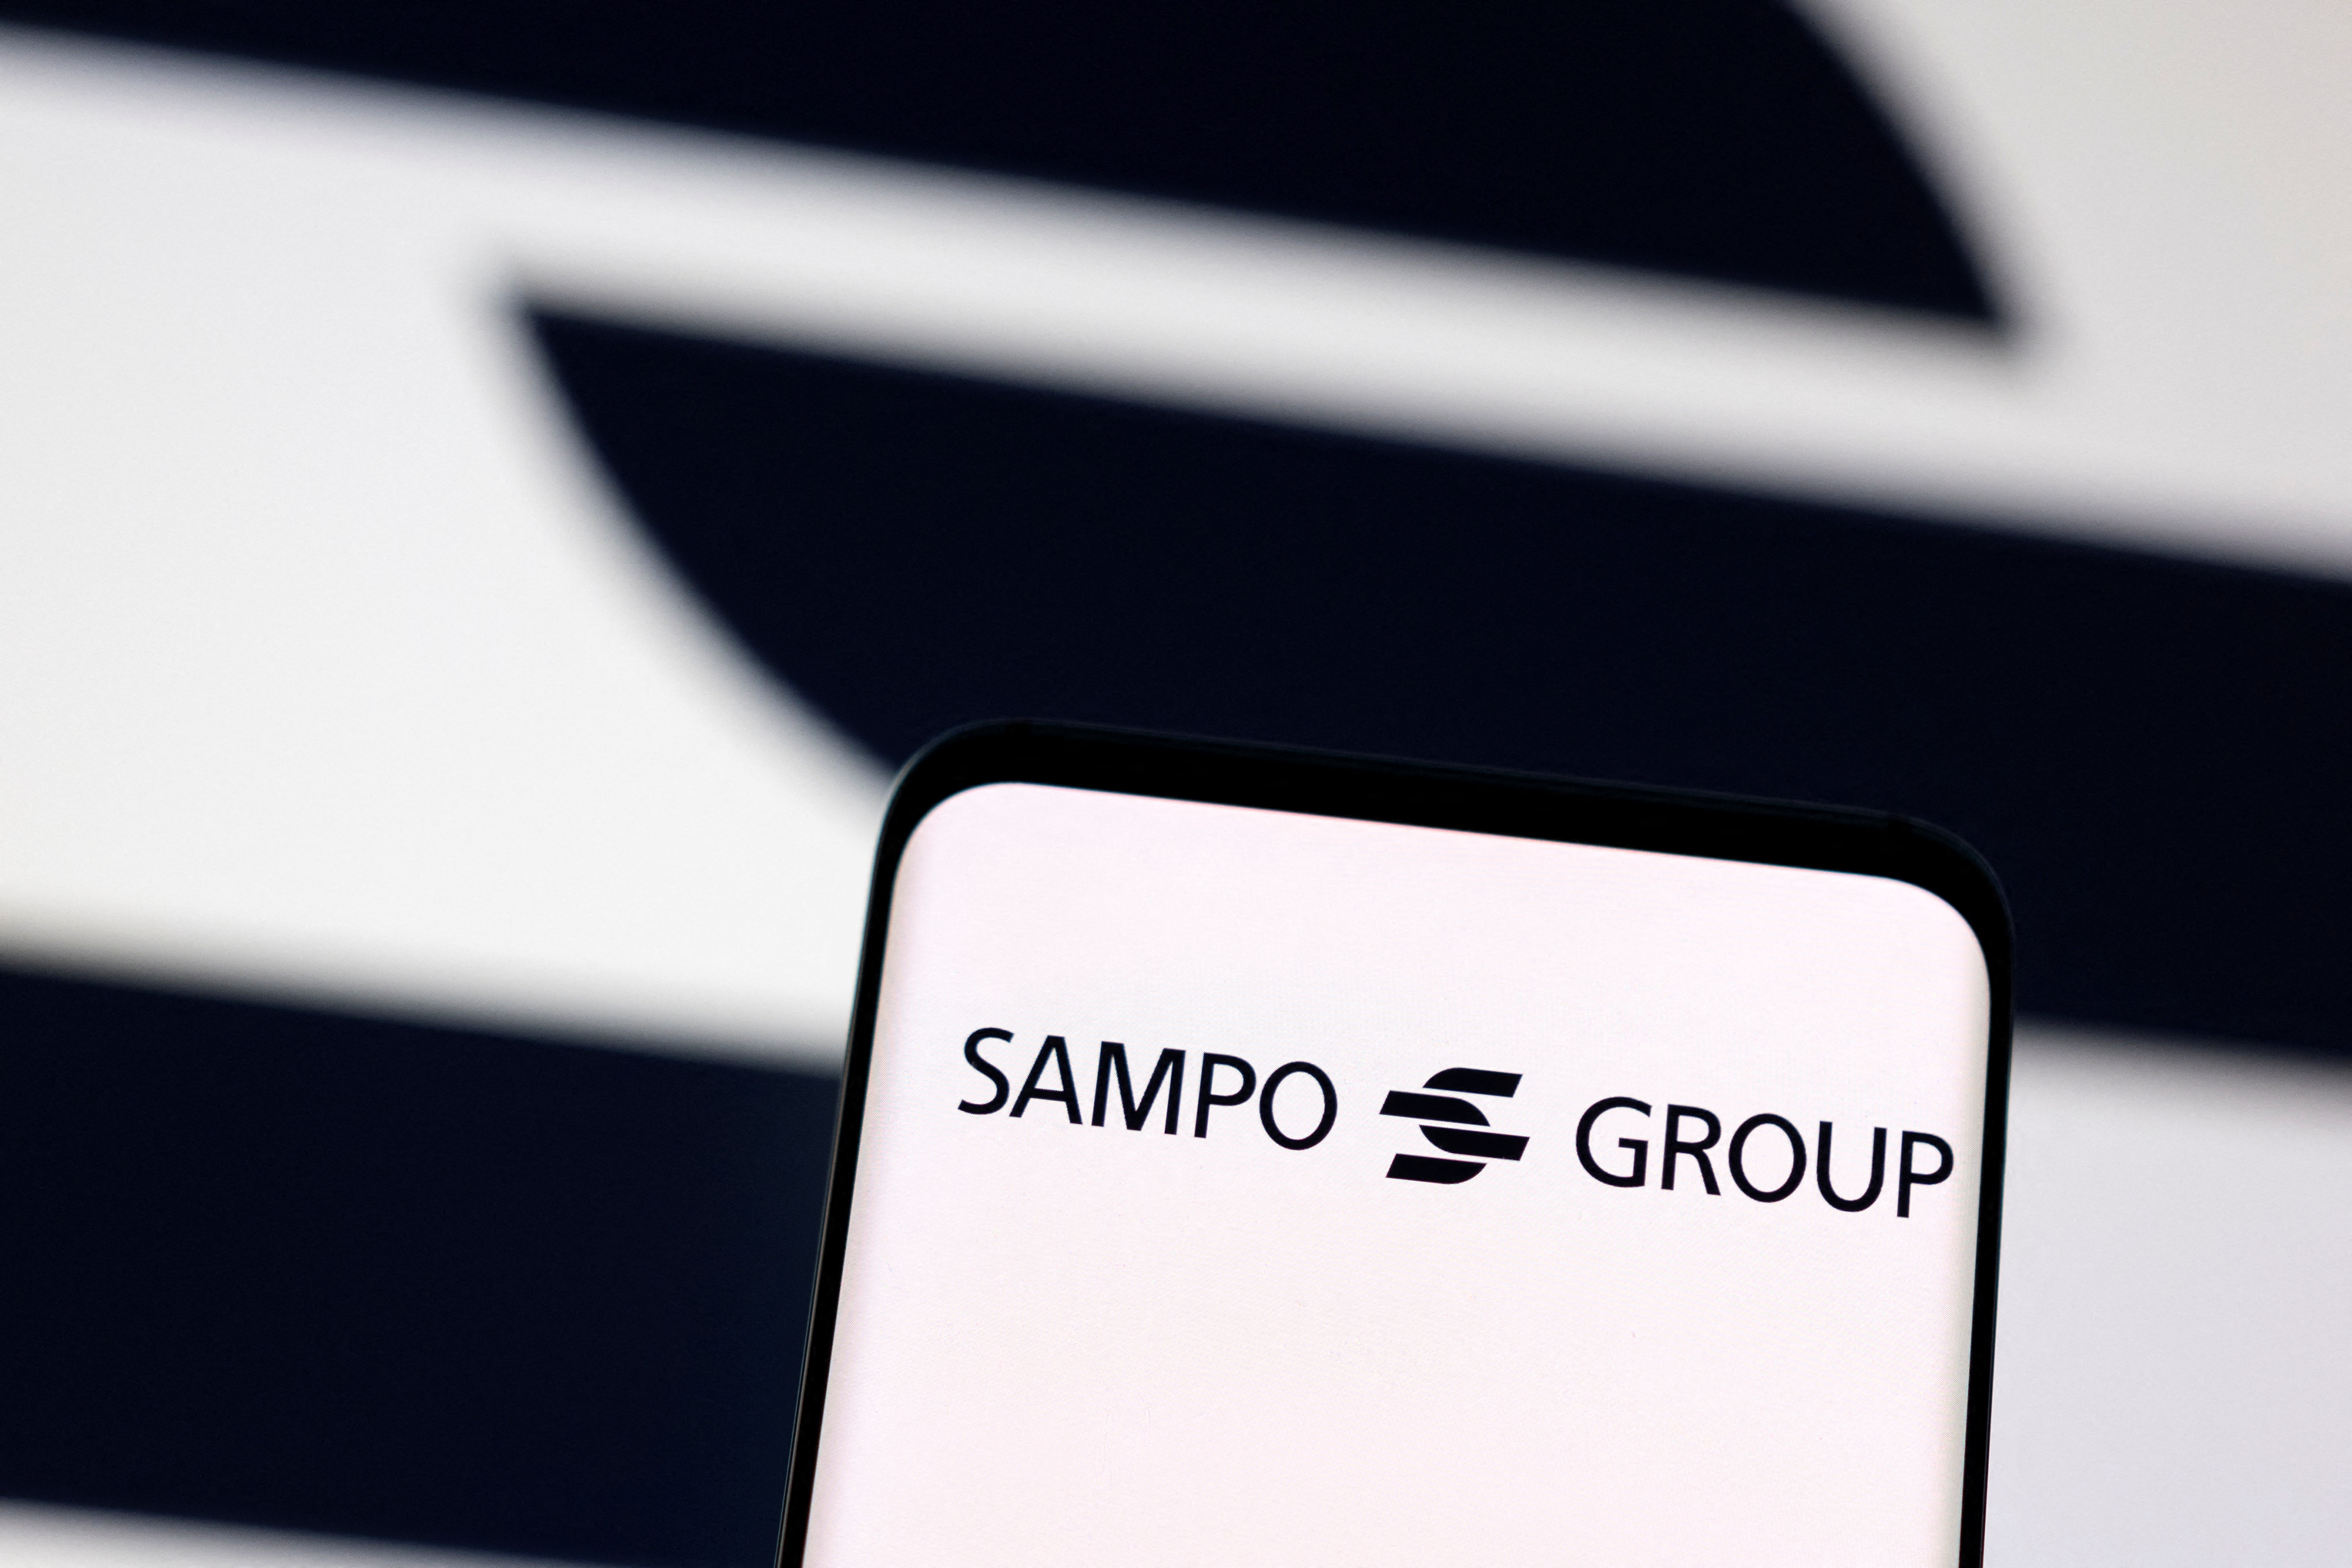 Illustration shows Sampo Group logo